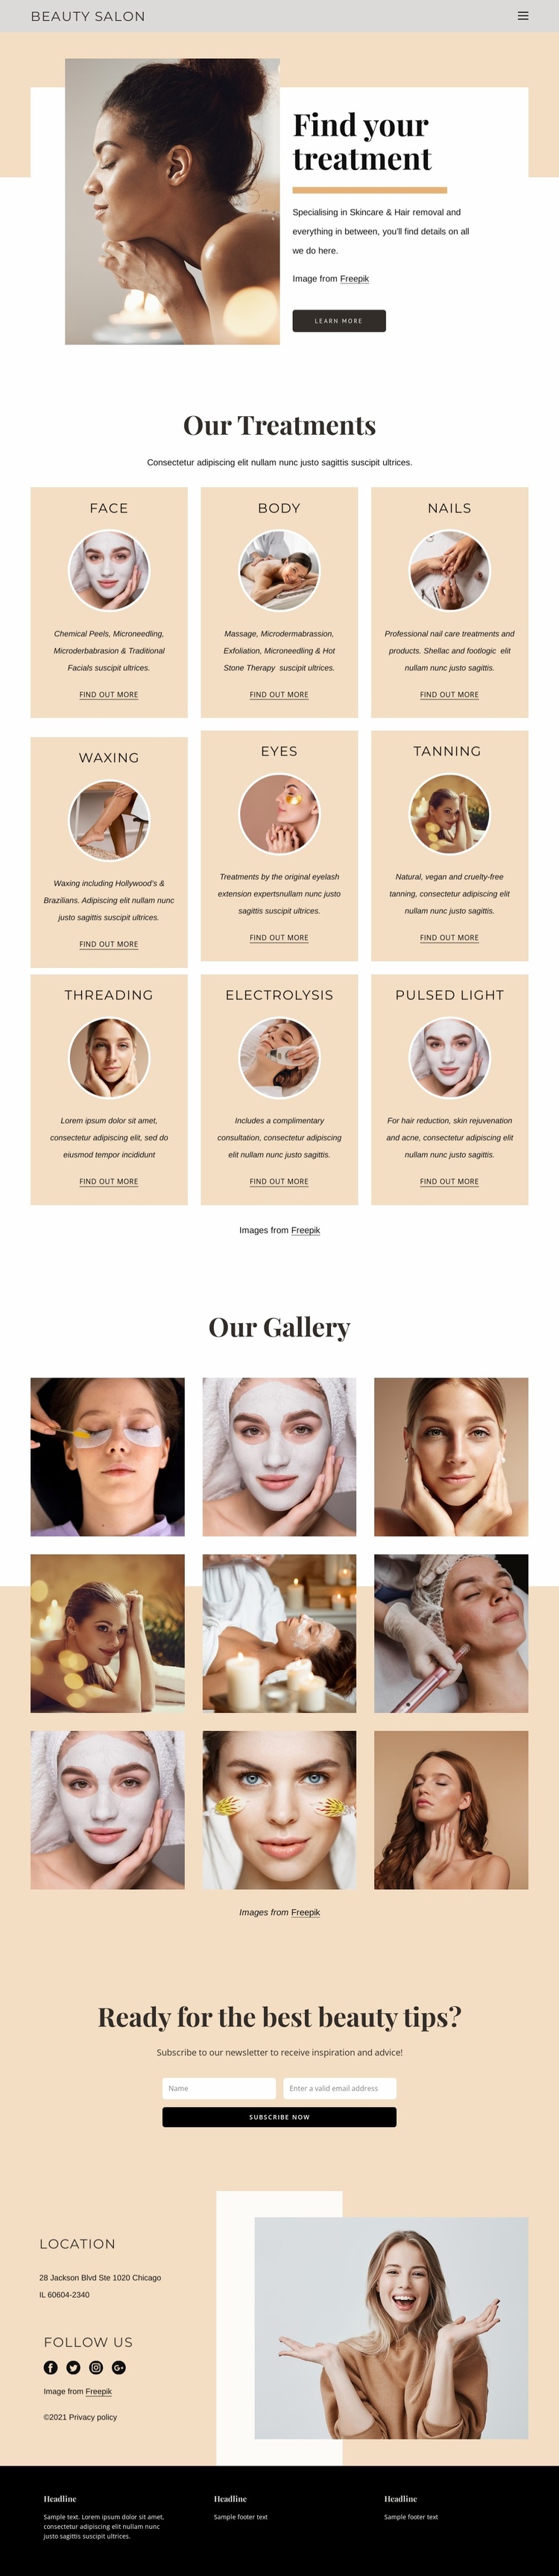 Professional beauty treatments Website Template